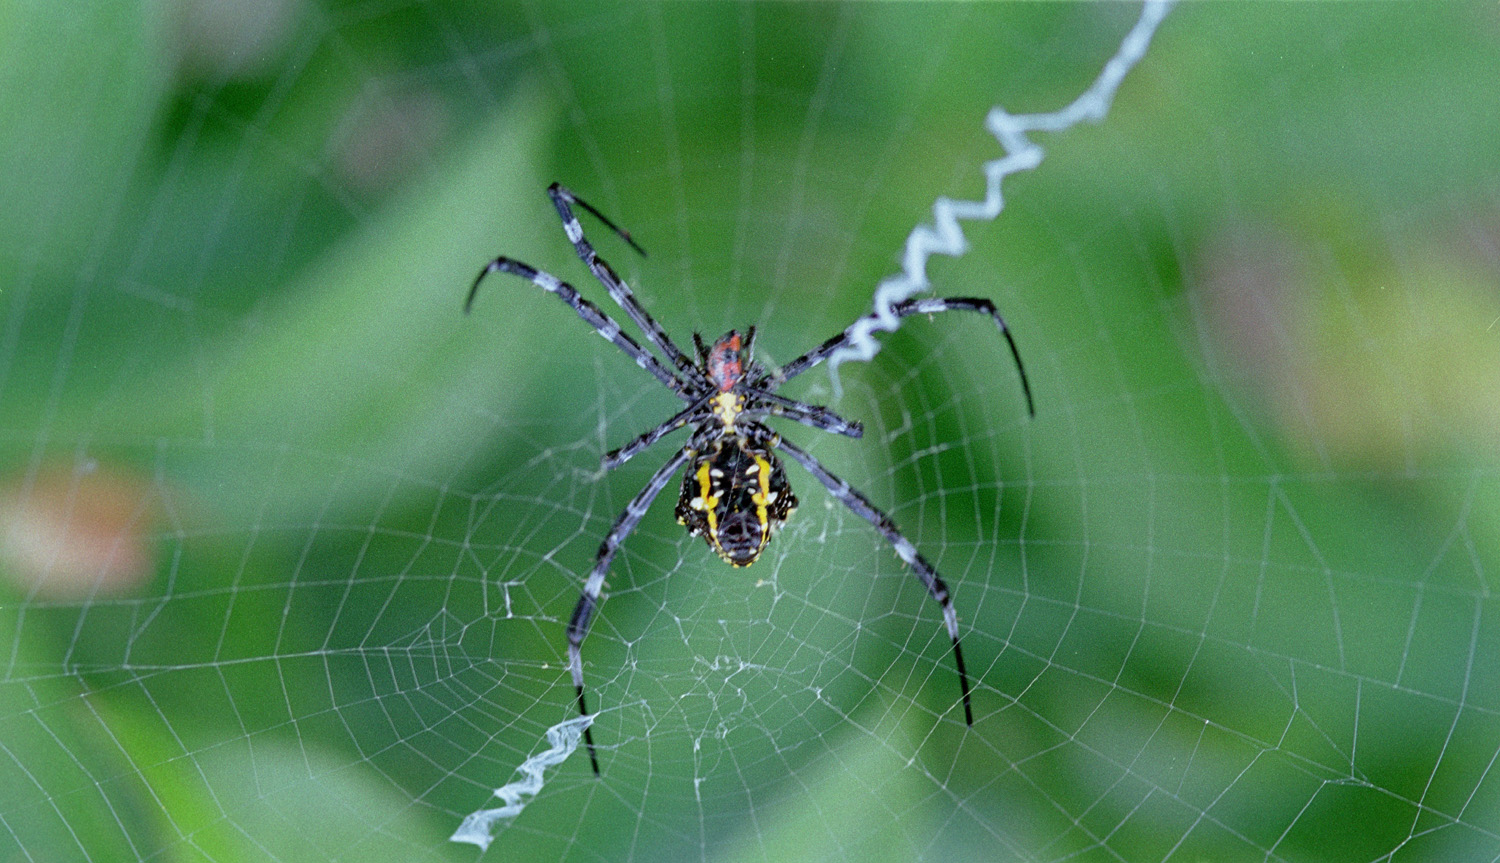 Hawaian Garden Spider